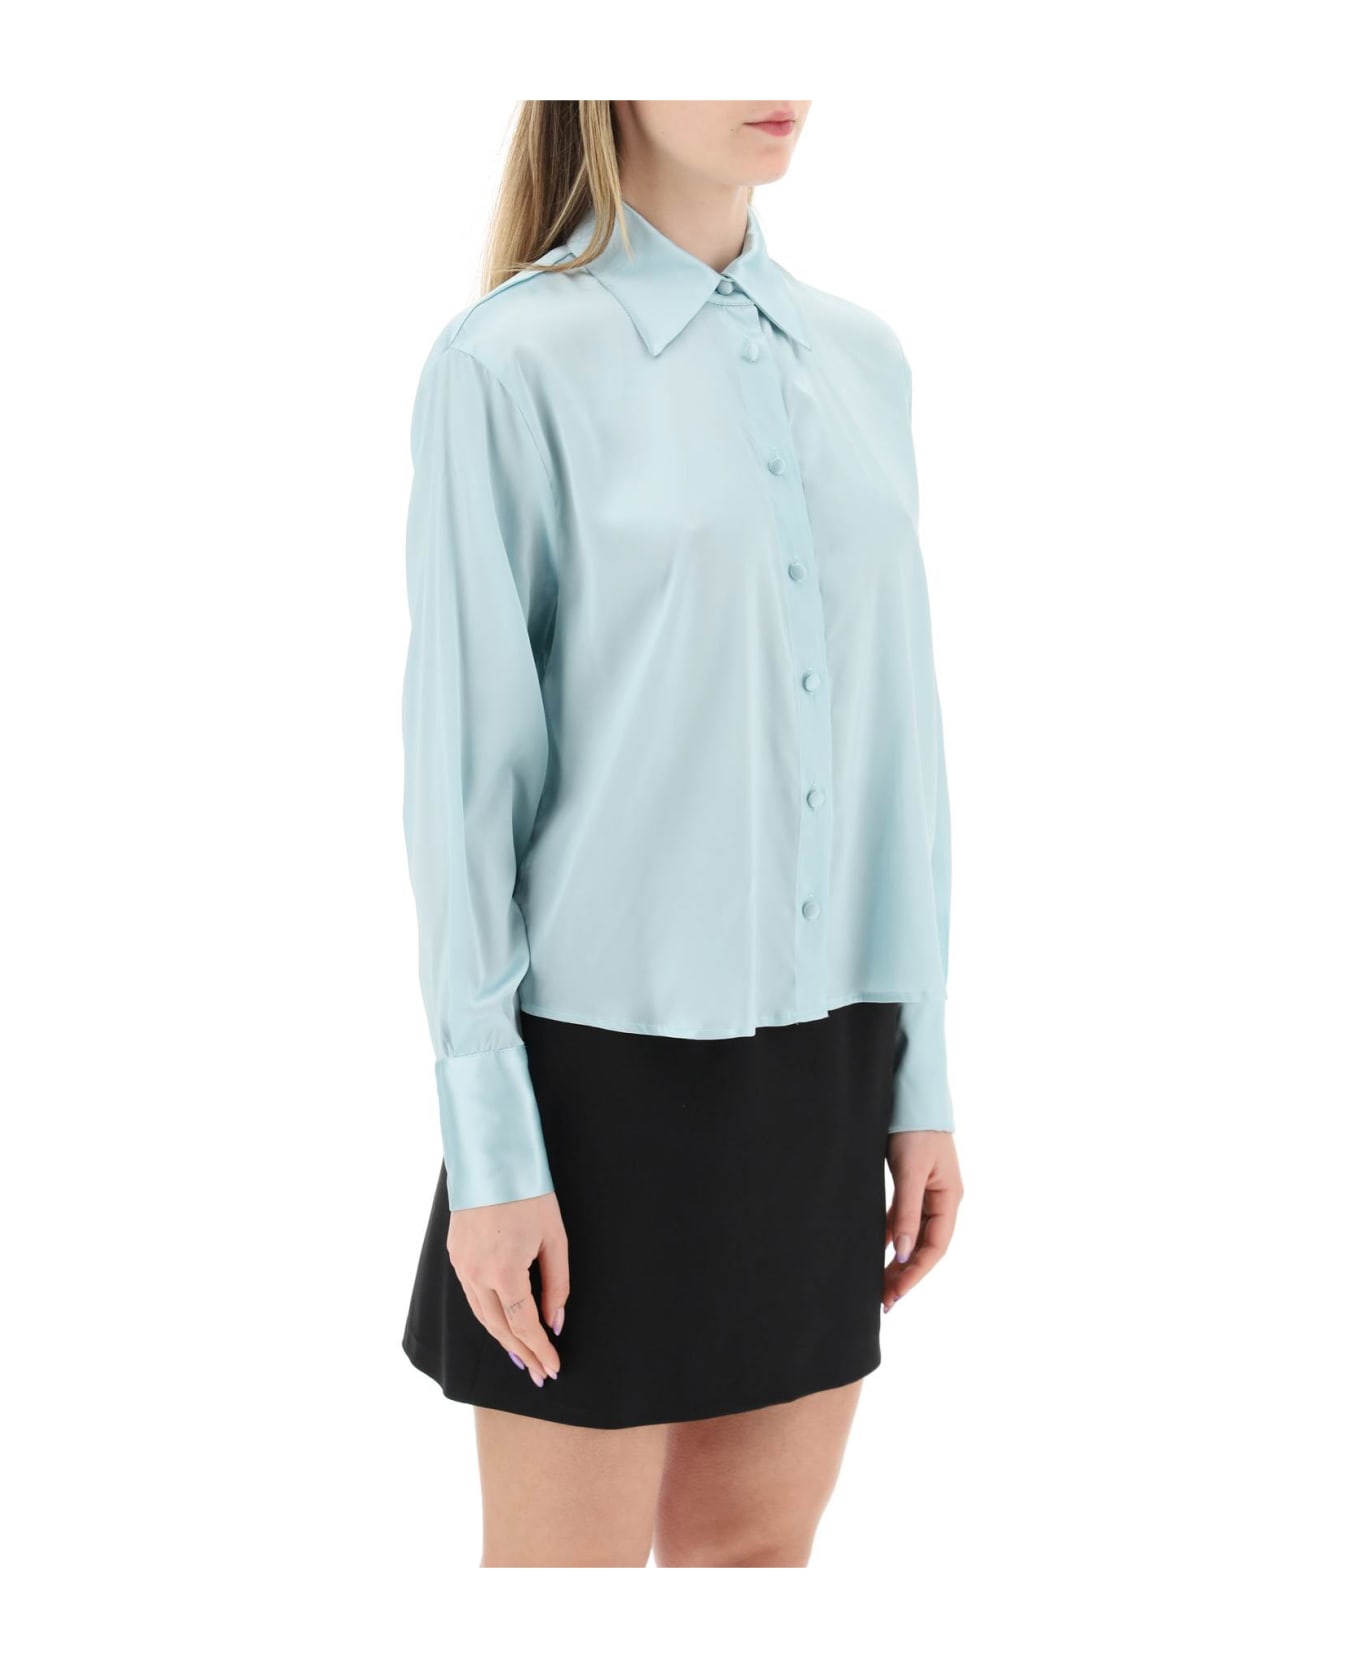 MVP Wardrobe Sunset Boulevard Satin Shirt - ALOE (Light blue)